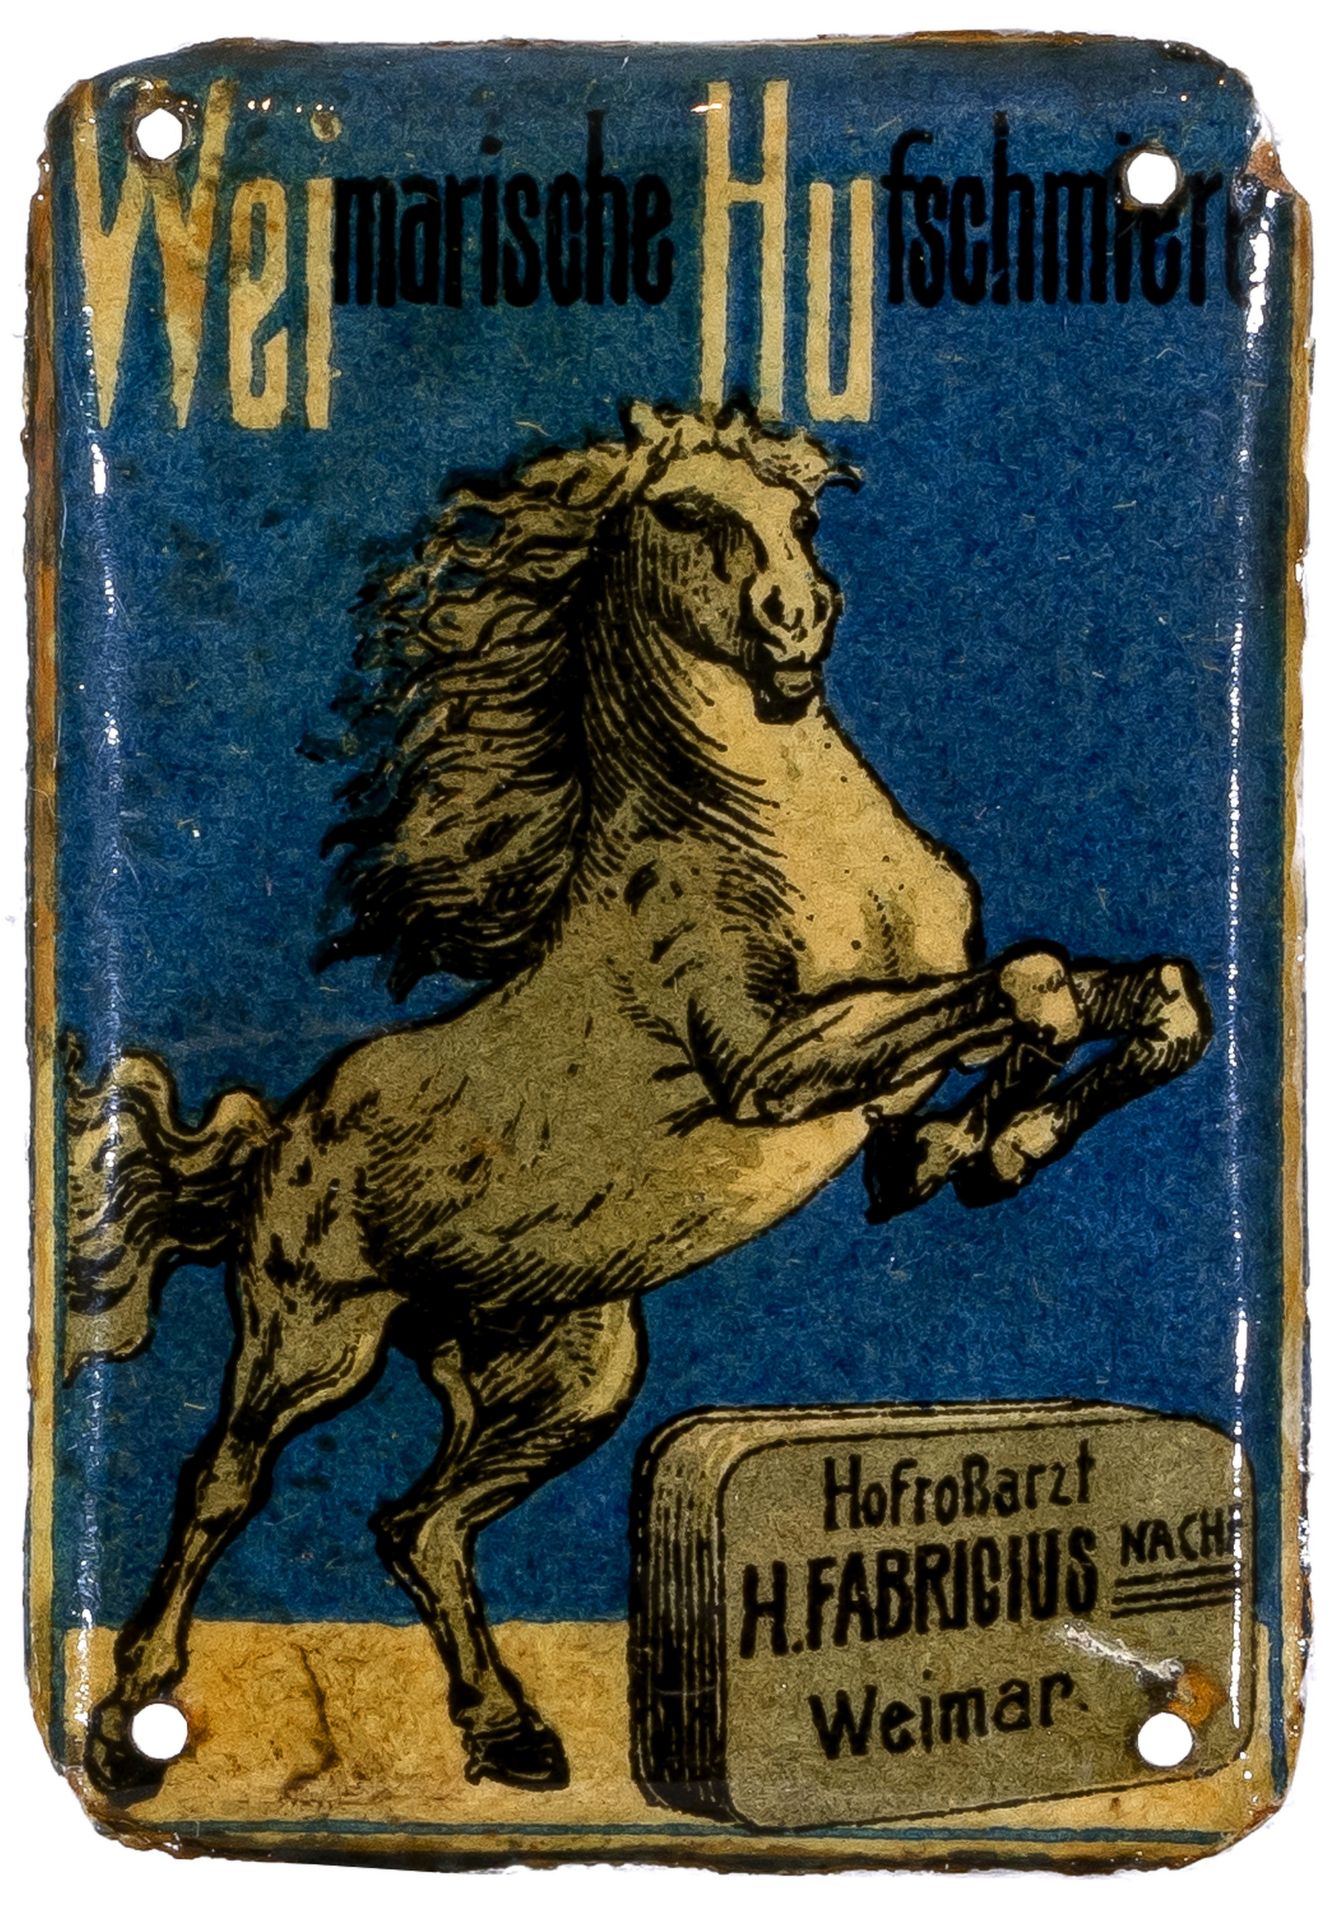 Miniatur-Werbeschild "Weimarische Hofschmiede"